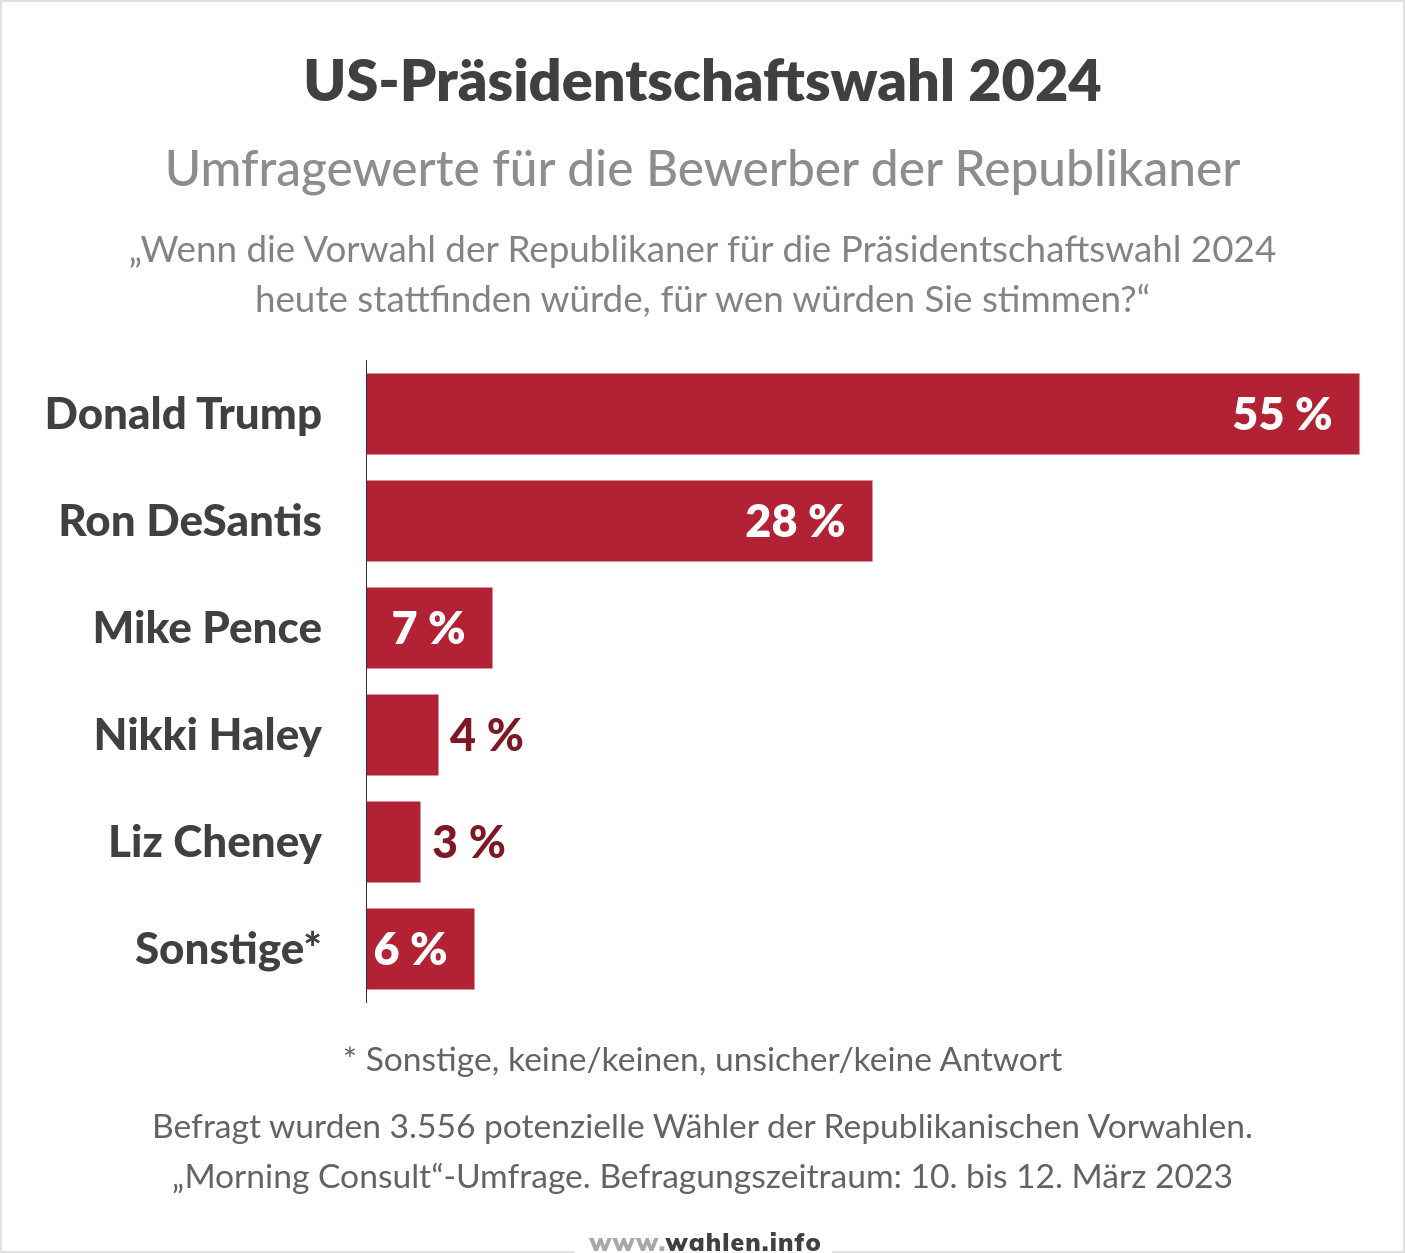 US-Wahl 2024 - Umfragen Vorwahlen der Republikaner (Trump, DeSantis, Pence, Haley, Cheney)